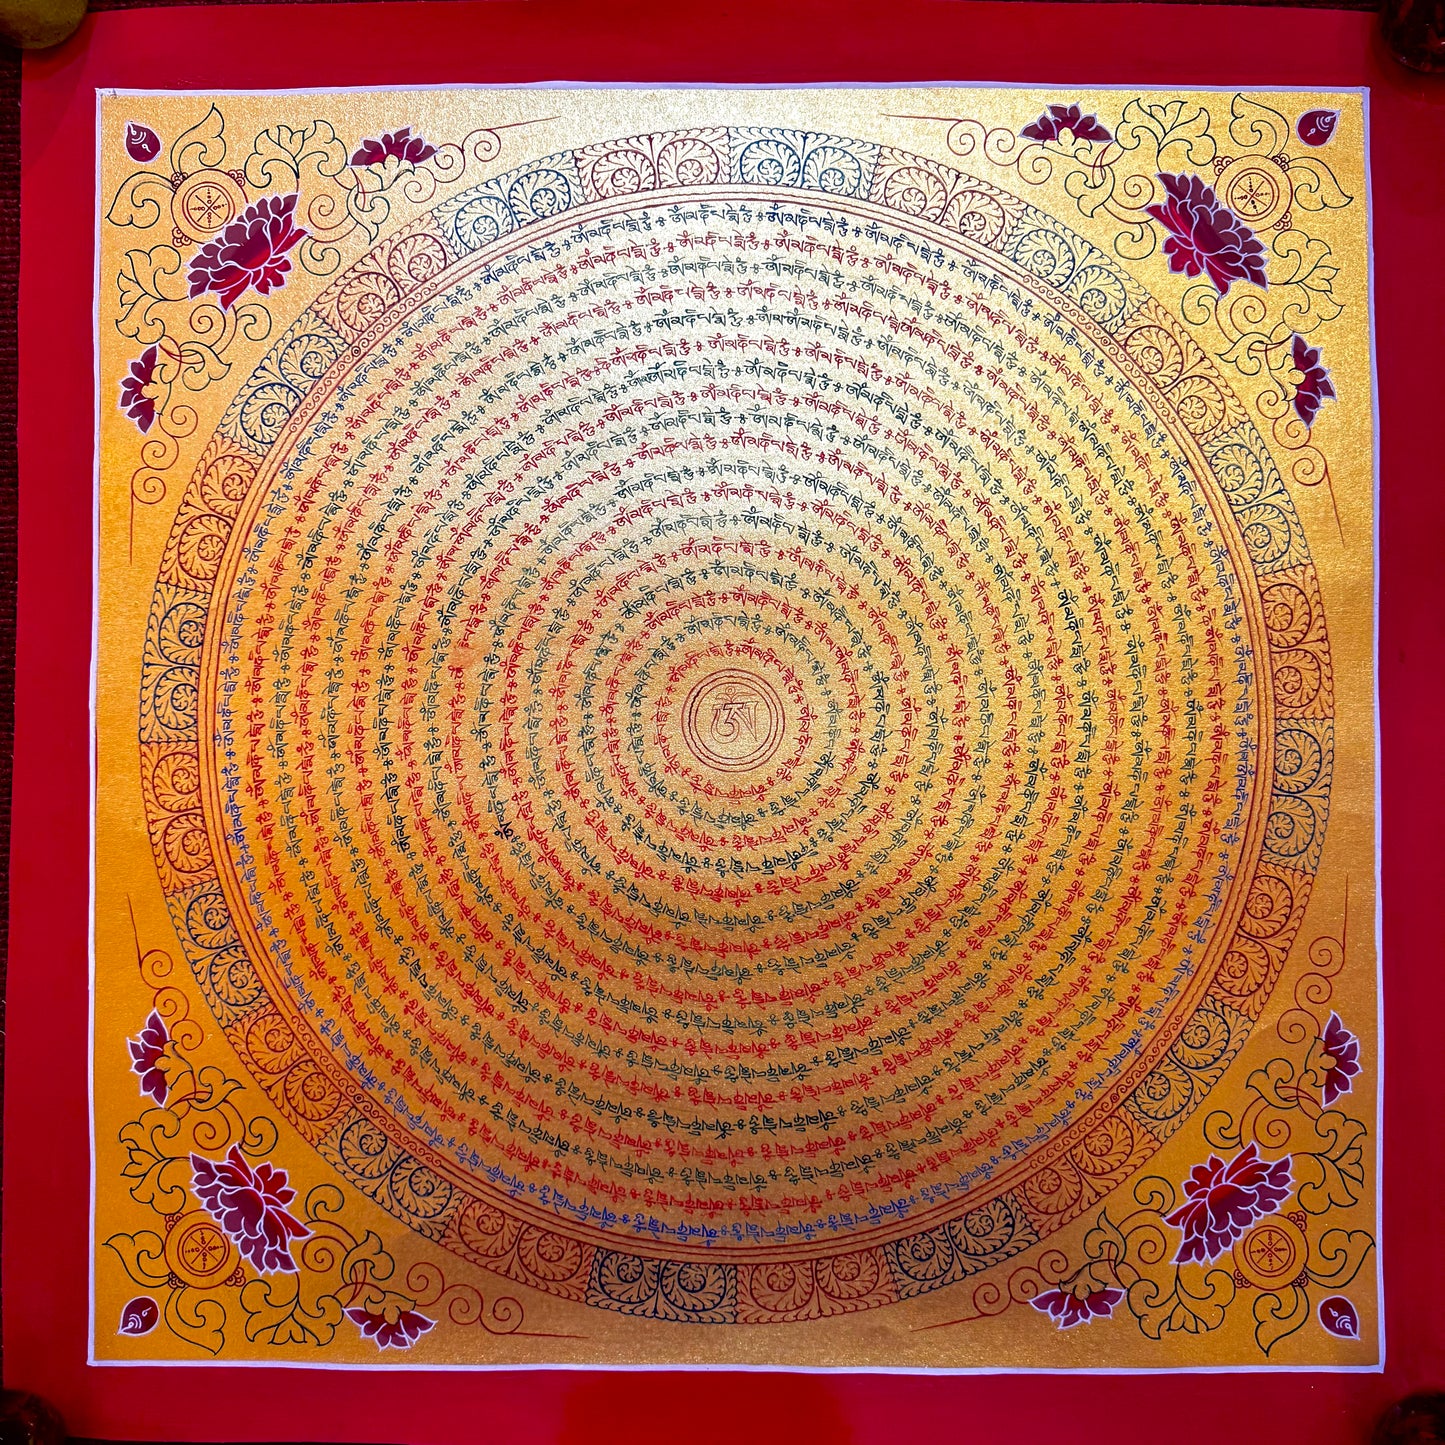 Traditional hand painted Mantra Mandala